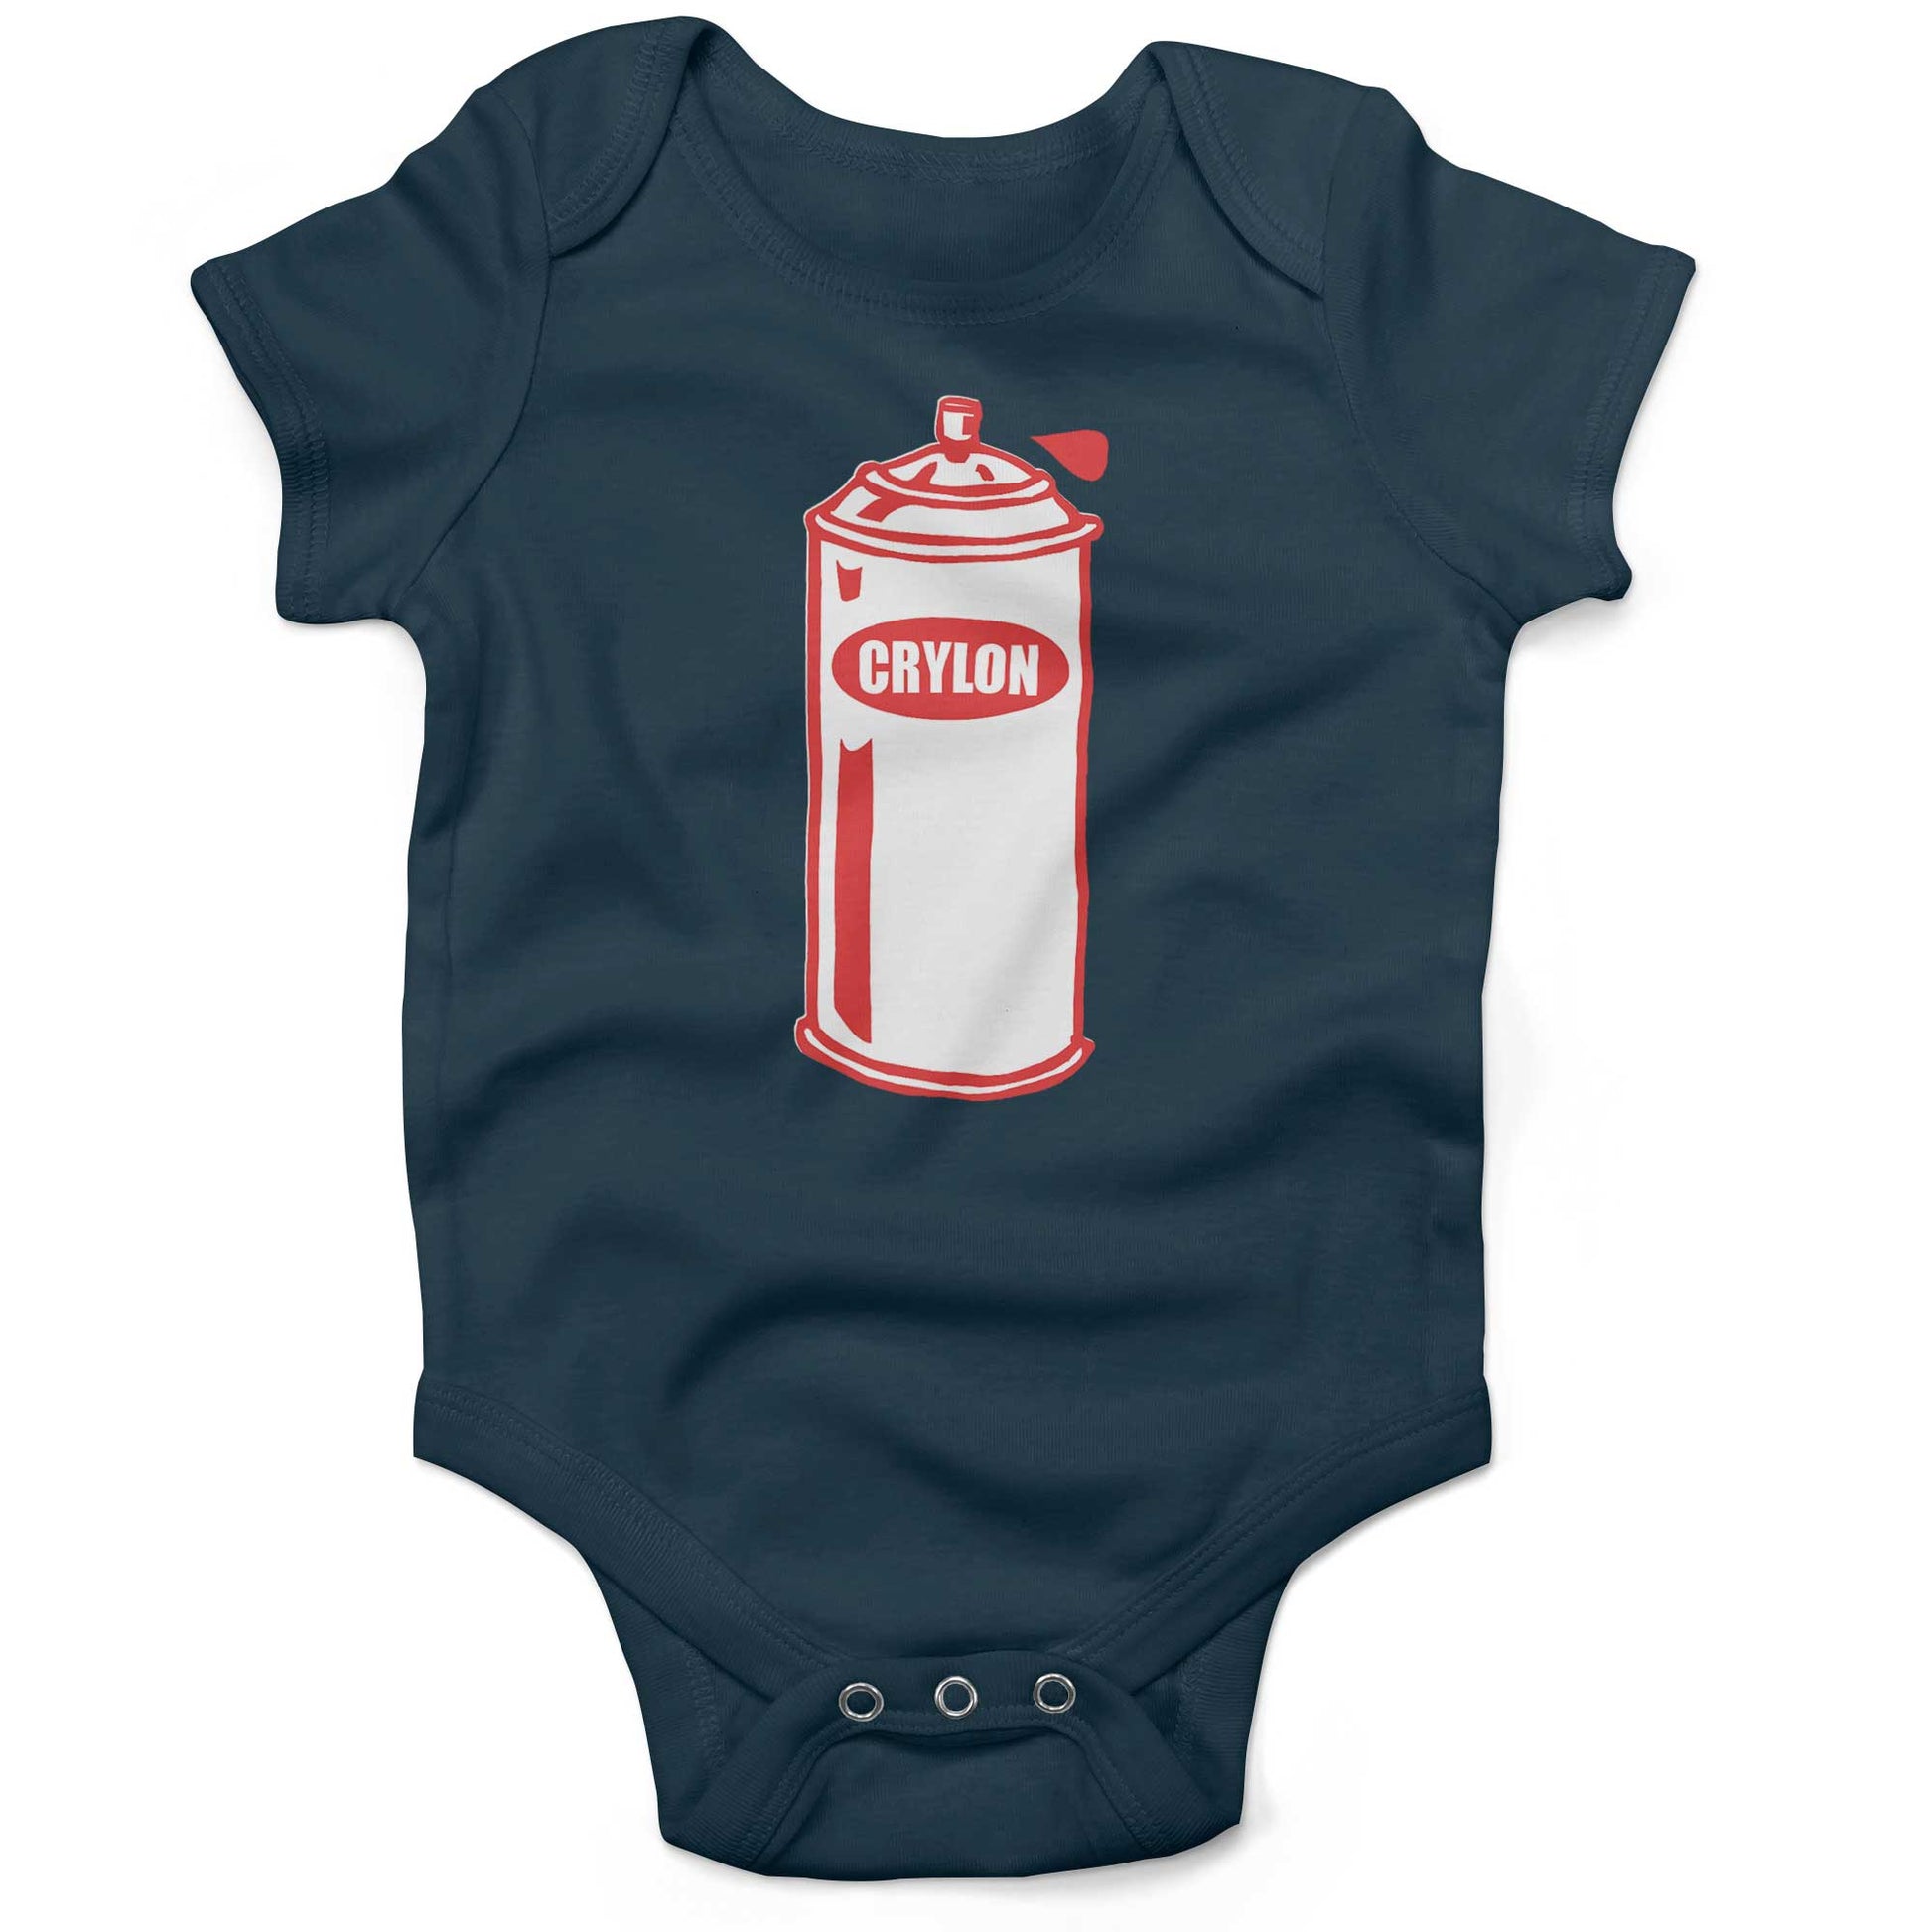 Crylon Cans Infant Bodysuit or Raglan Tee-Organic Pacific Blue-3-6 months